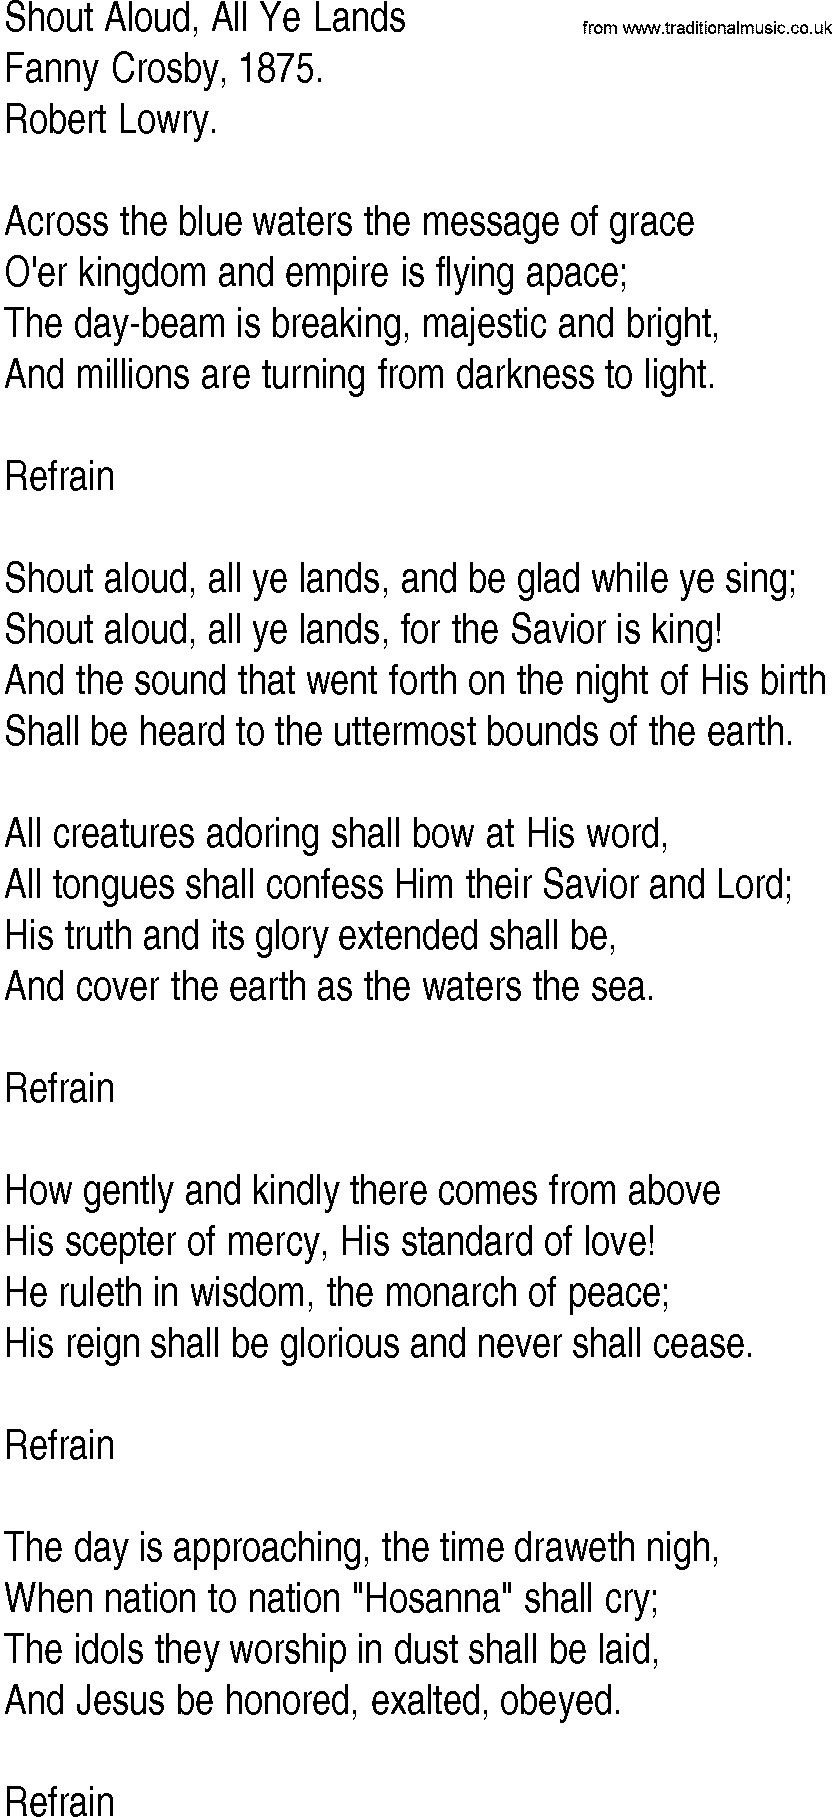 Hymn and Gospel Song: Shout Aloud, All Ye Lands by Fanny Crosby lyrics